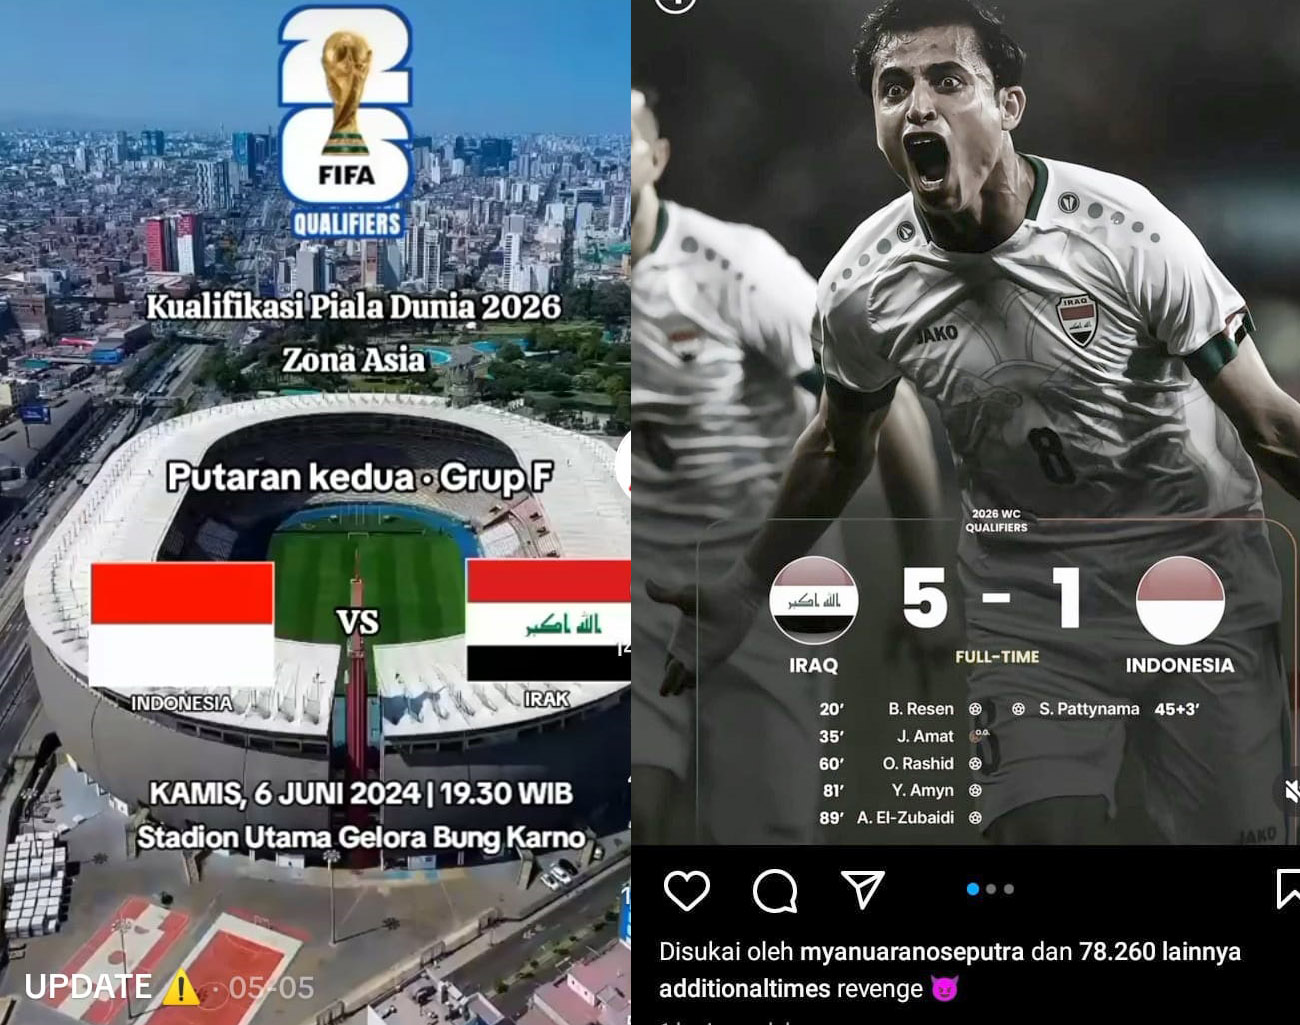 Waspada Irak, Leg 1 Kualifikasi Piala Dunia 2026 Zona Asia, Indonesia Kebobolan 5-1